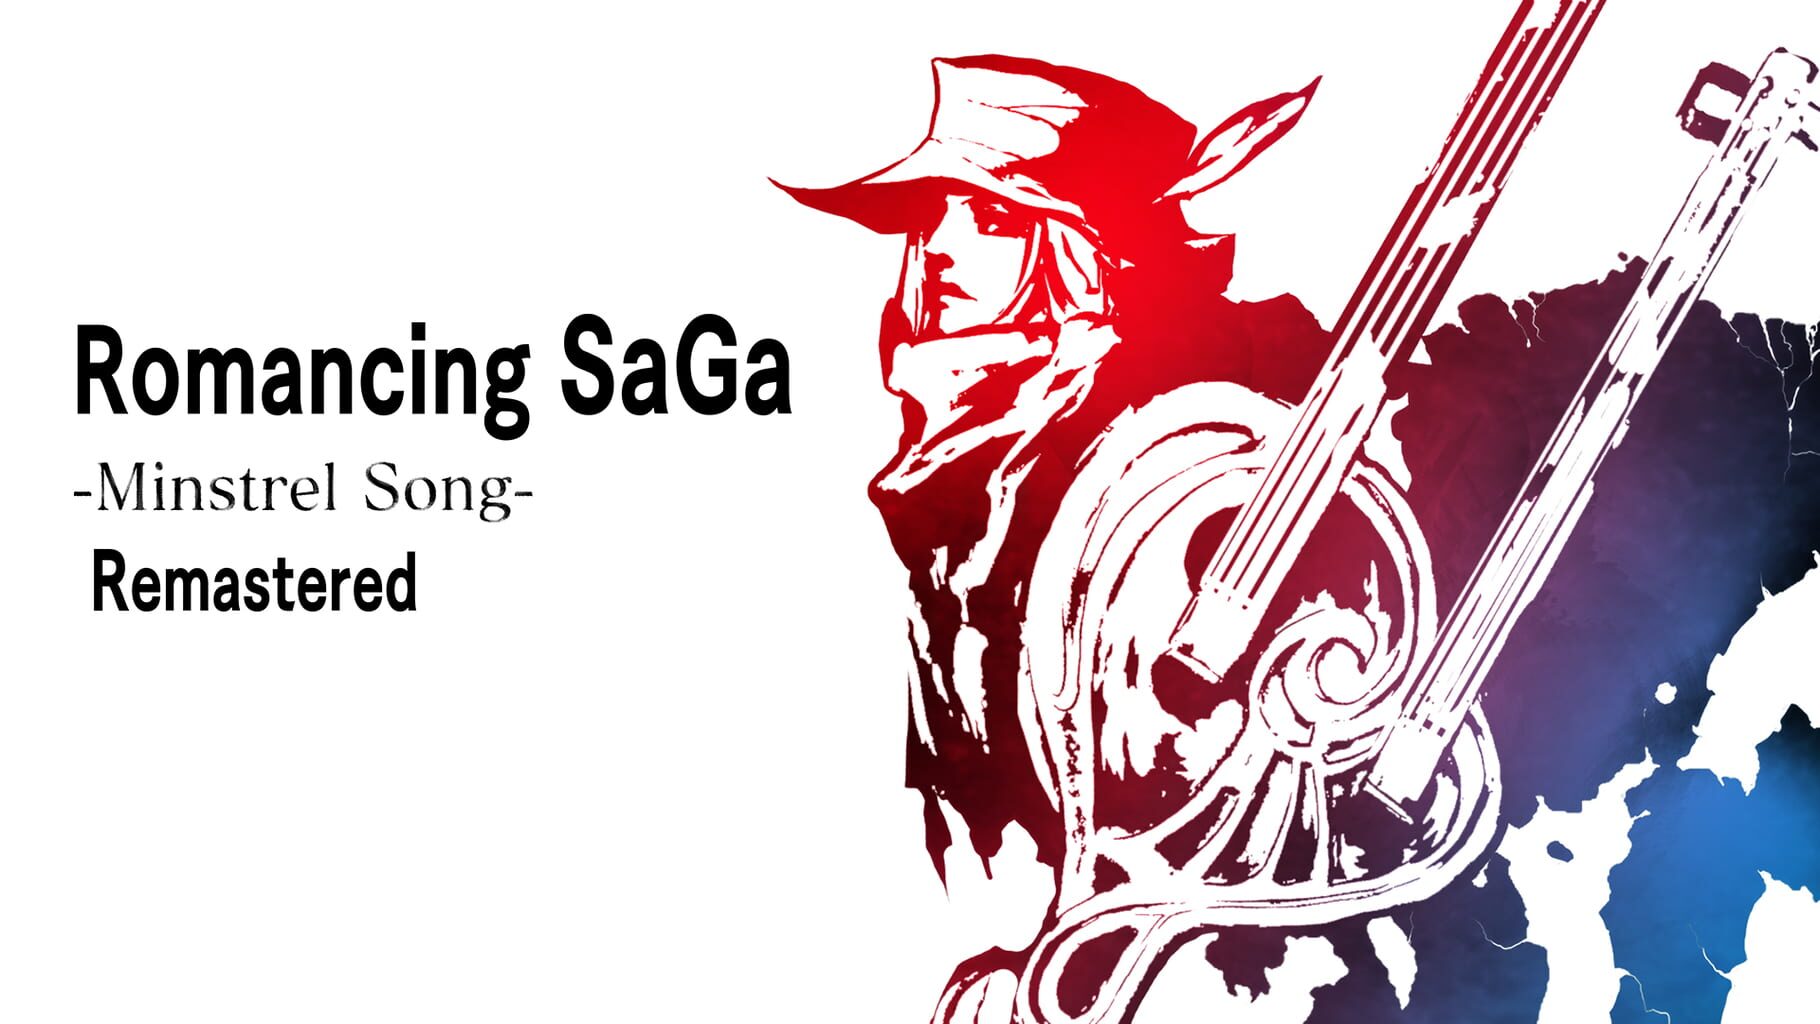 Arte - Romancing SaGa: Minstrel Song Remastered